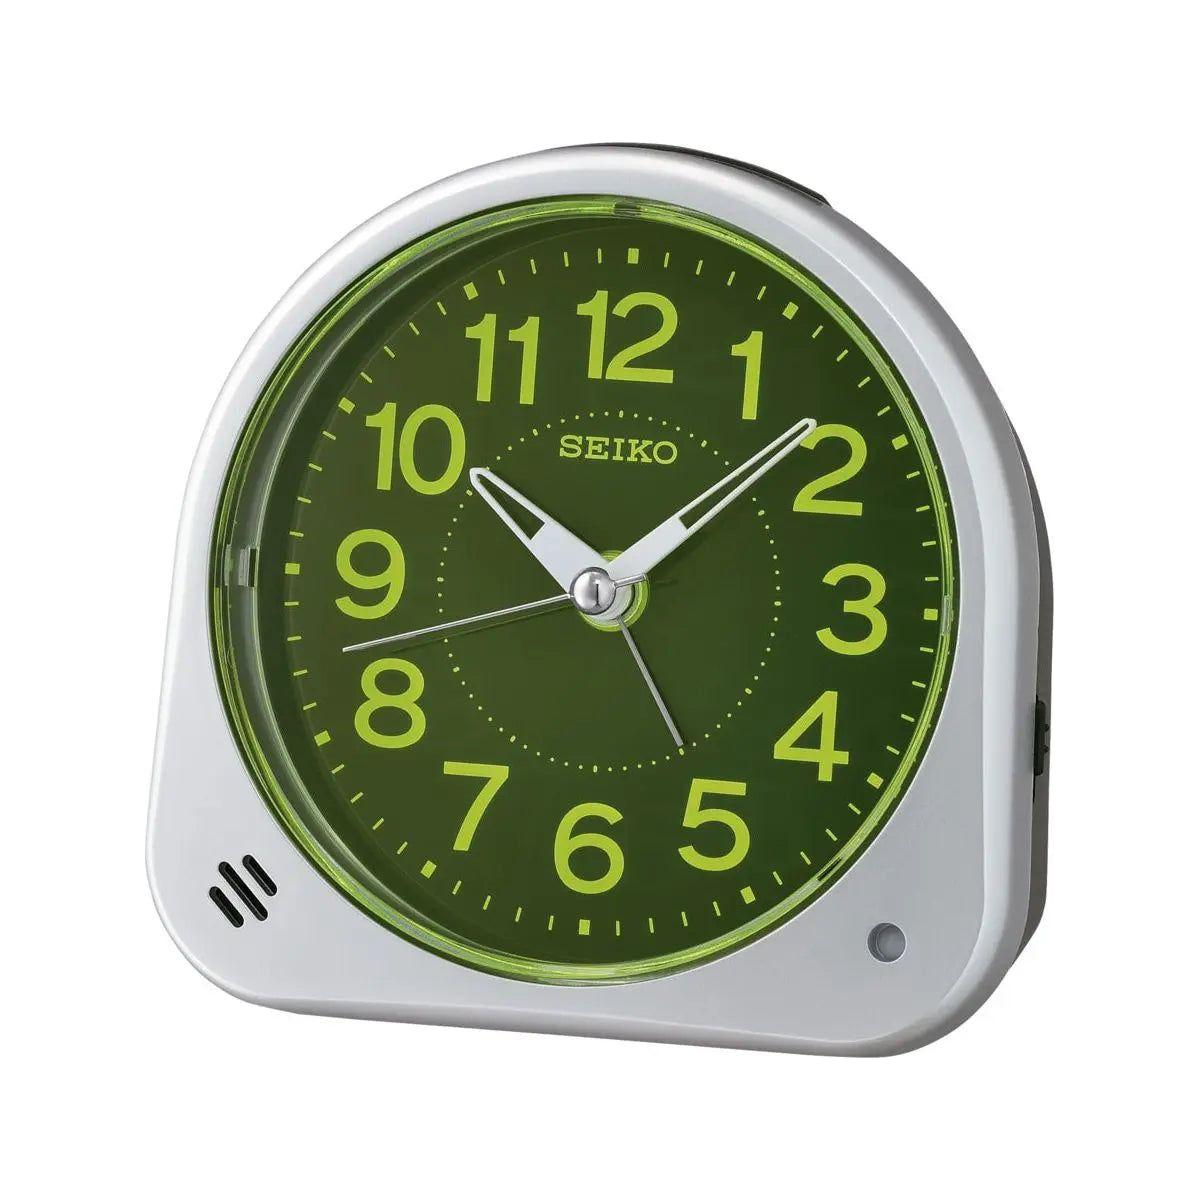 SEIKO CLOCKS SEIKO CLOCKS WATCHES Mod. QHE188S WATCHES seiko-clocks-watches-mod-qhe188s